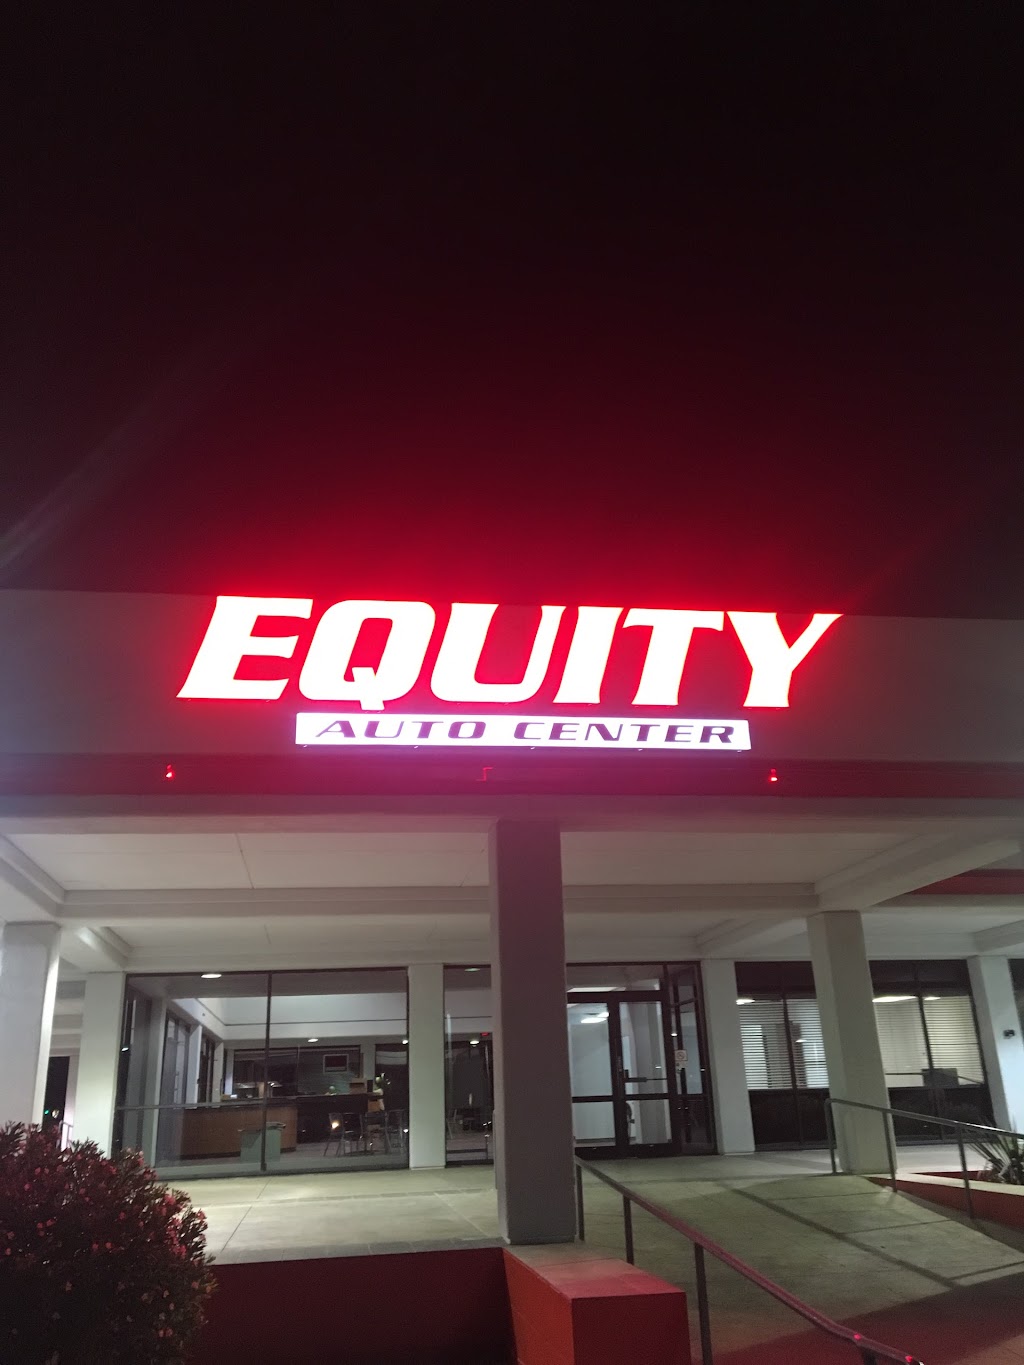 Equity Auto Center | Photo 5 of 10 | Address: 1645 W Bell Rd, Phoenix, AZ 85023, USA | Phone: (602) 626-7447